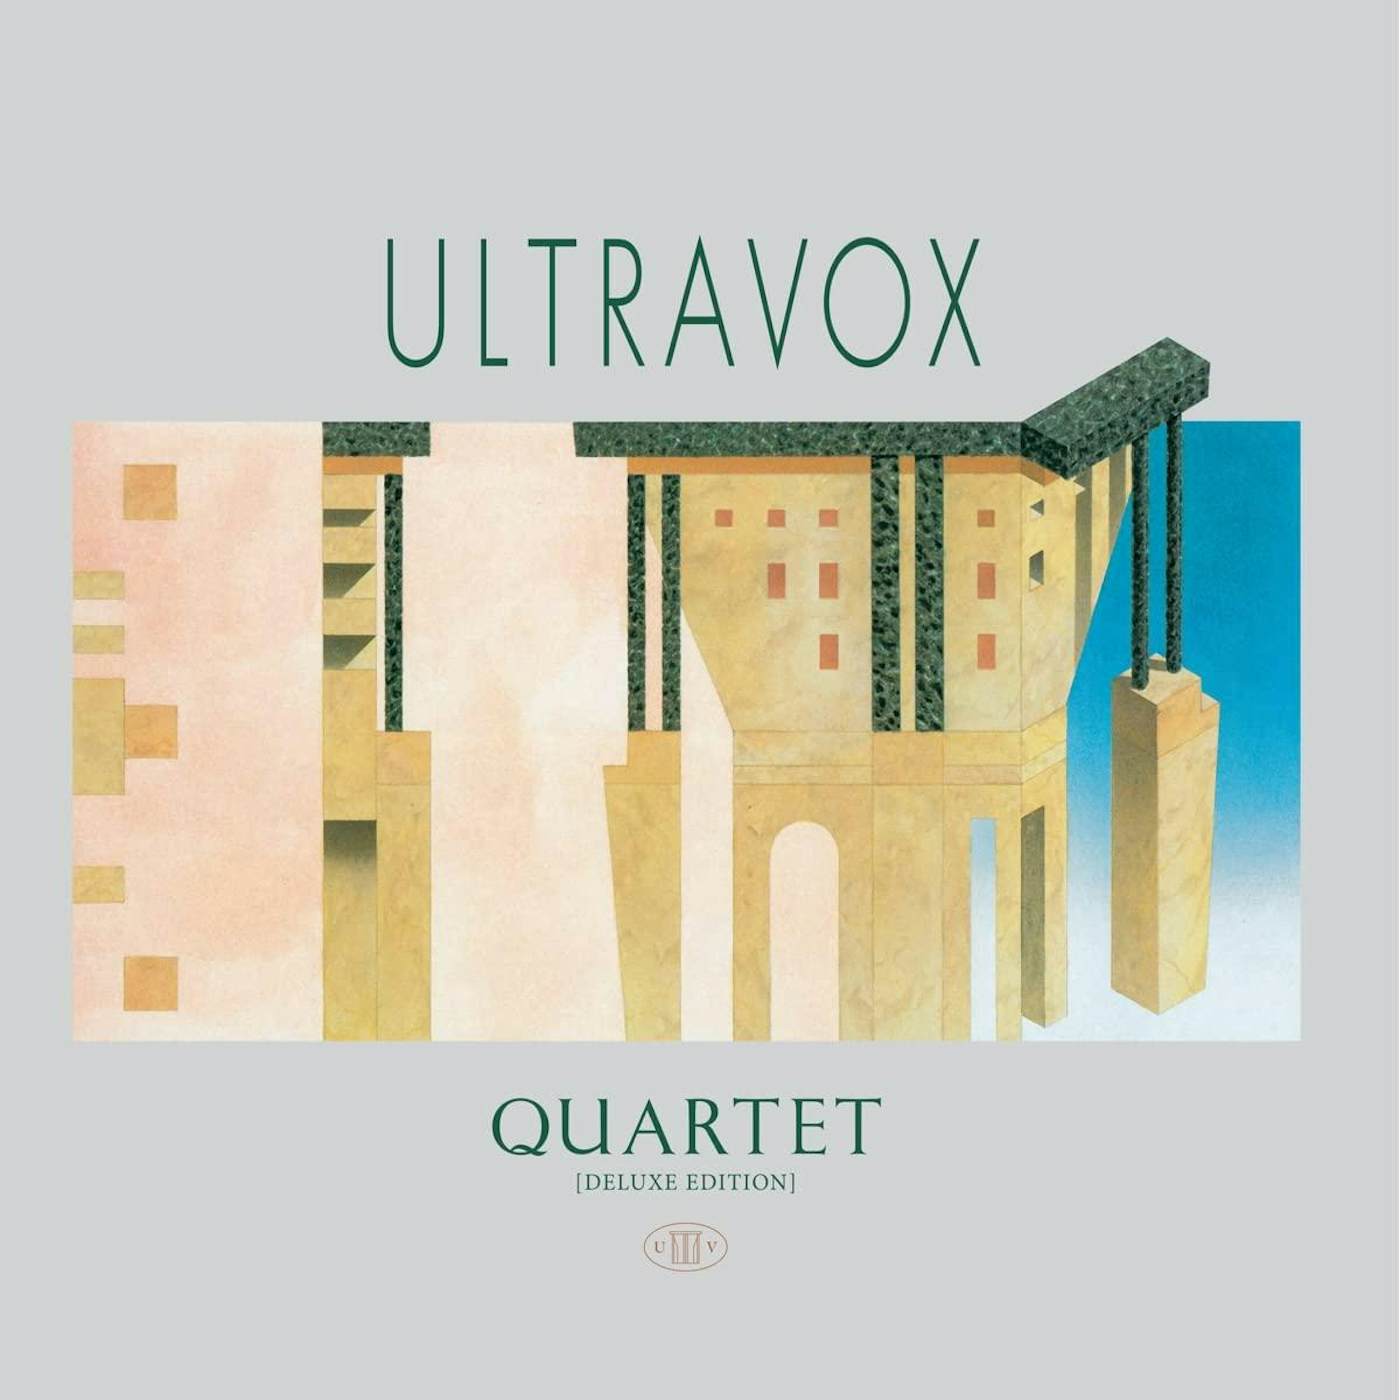 Ultravox Quartet (Deluxe Edition/4LP) Box Set (Vinyl)